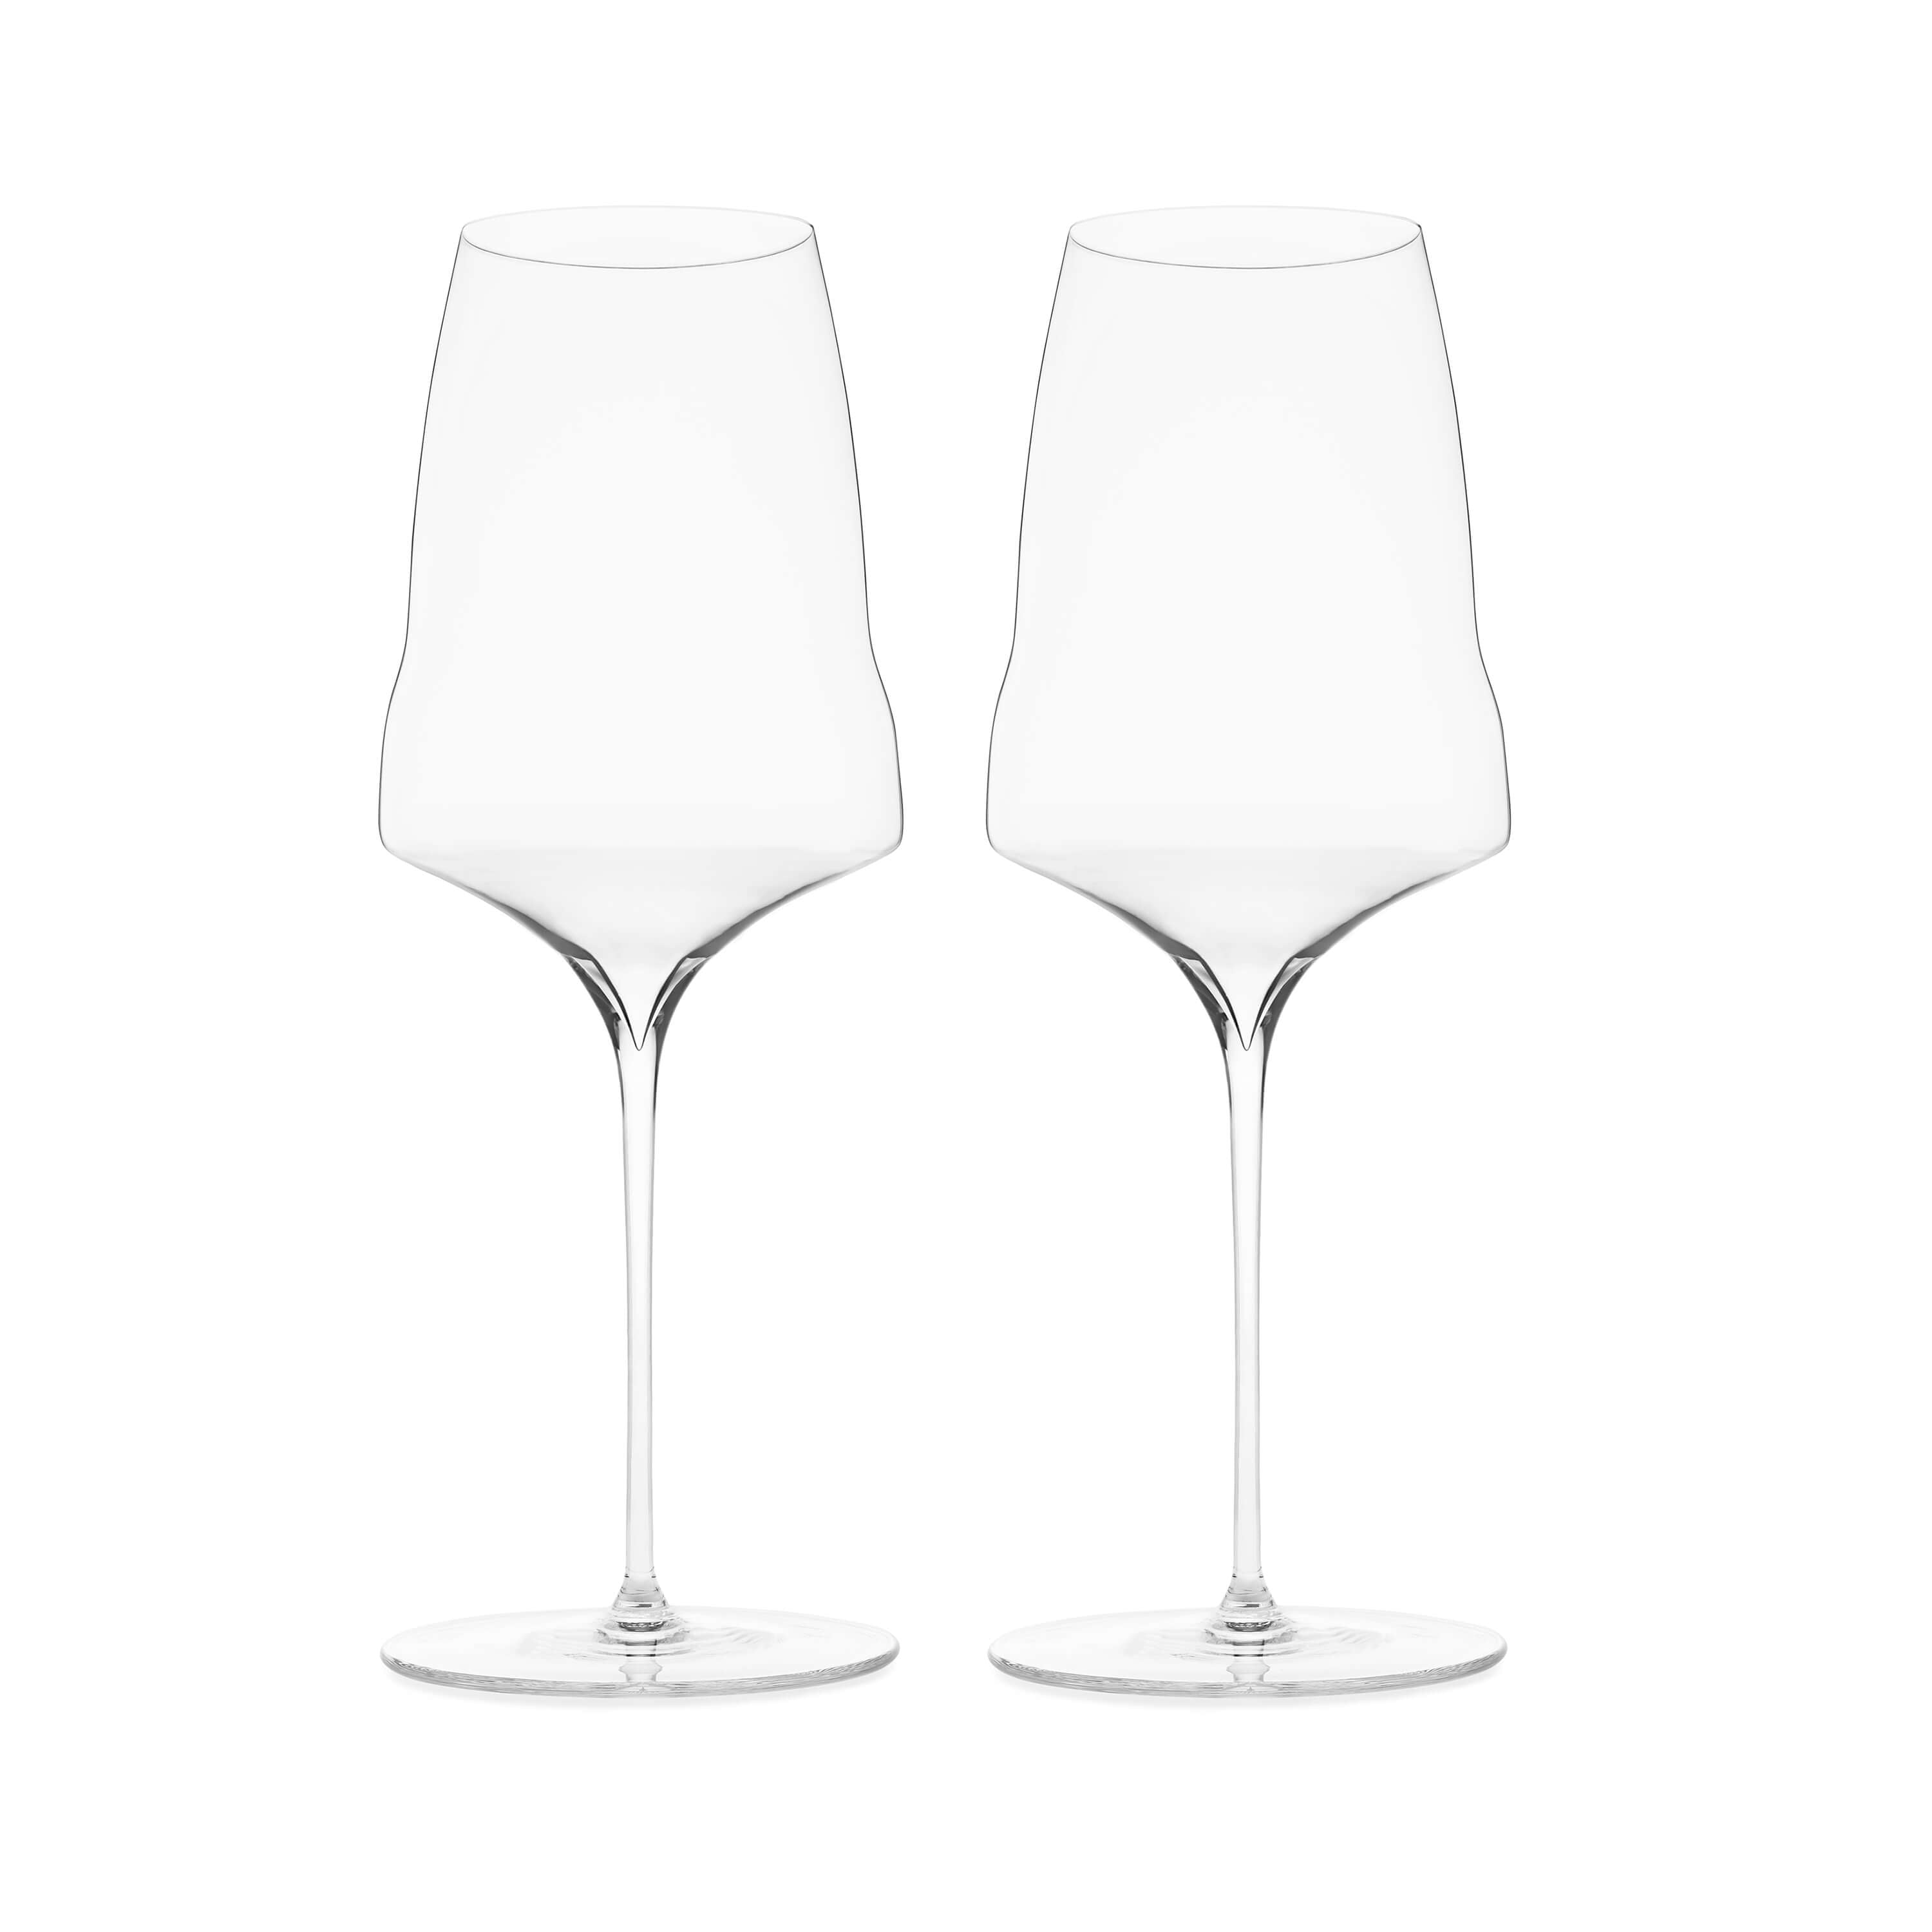 JOSEPHINE No 2 by Josephinenhütte – Universal wine glasses #Set of 2 glasses_JOSEPHINE No 2 – Universal